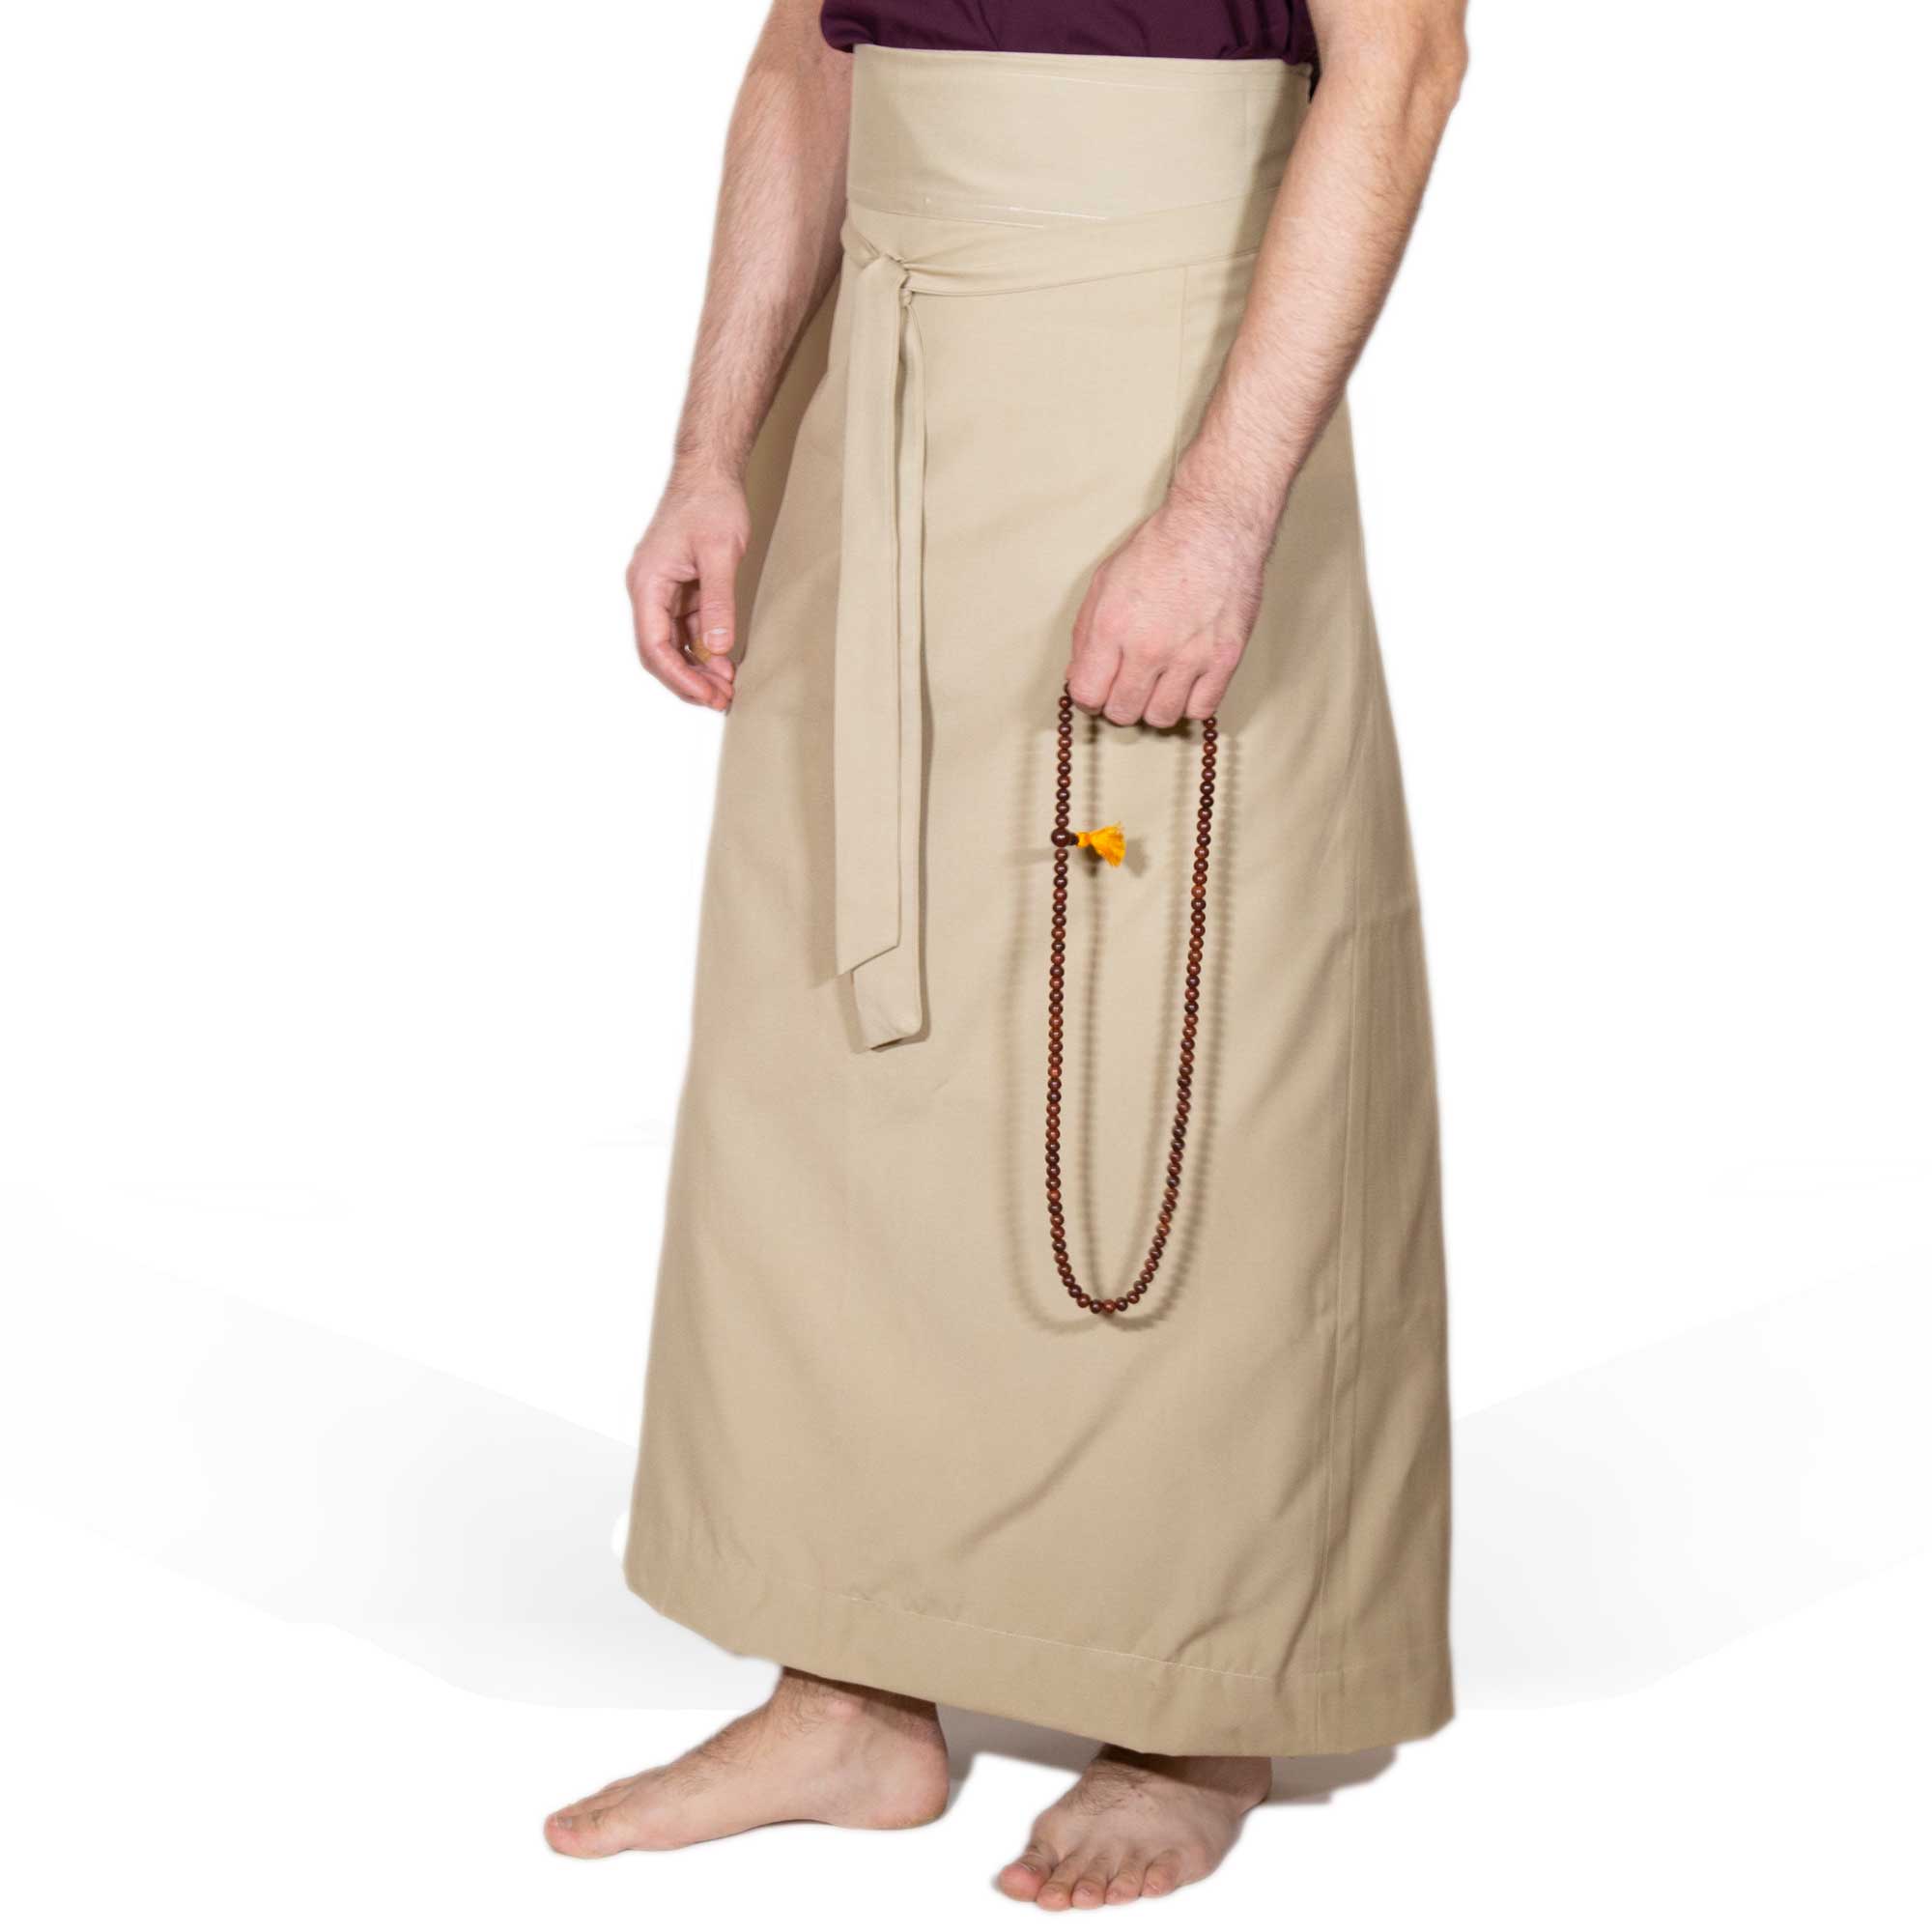 Wraparound Chuba Skirt - Khaki -Small - Clearance